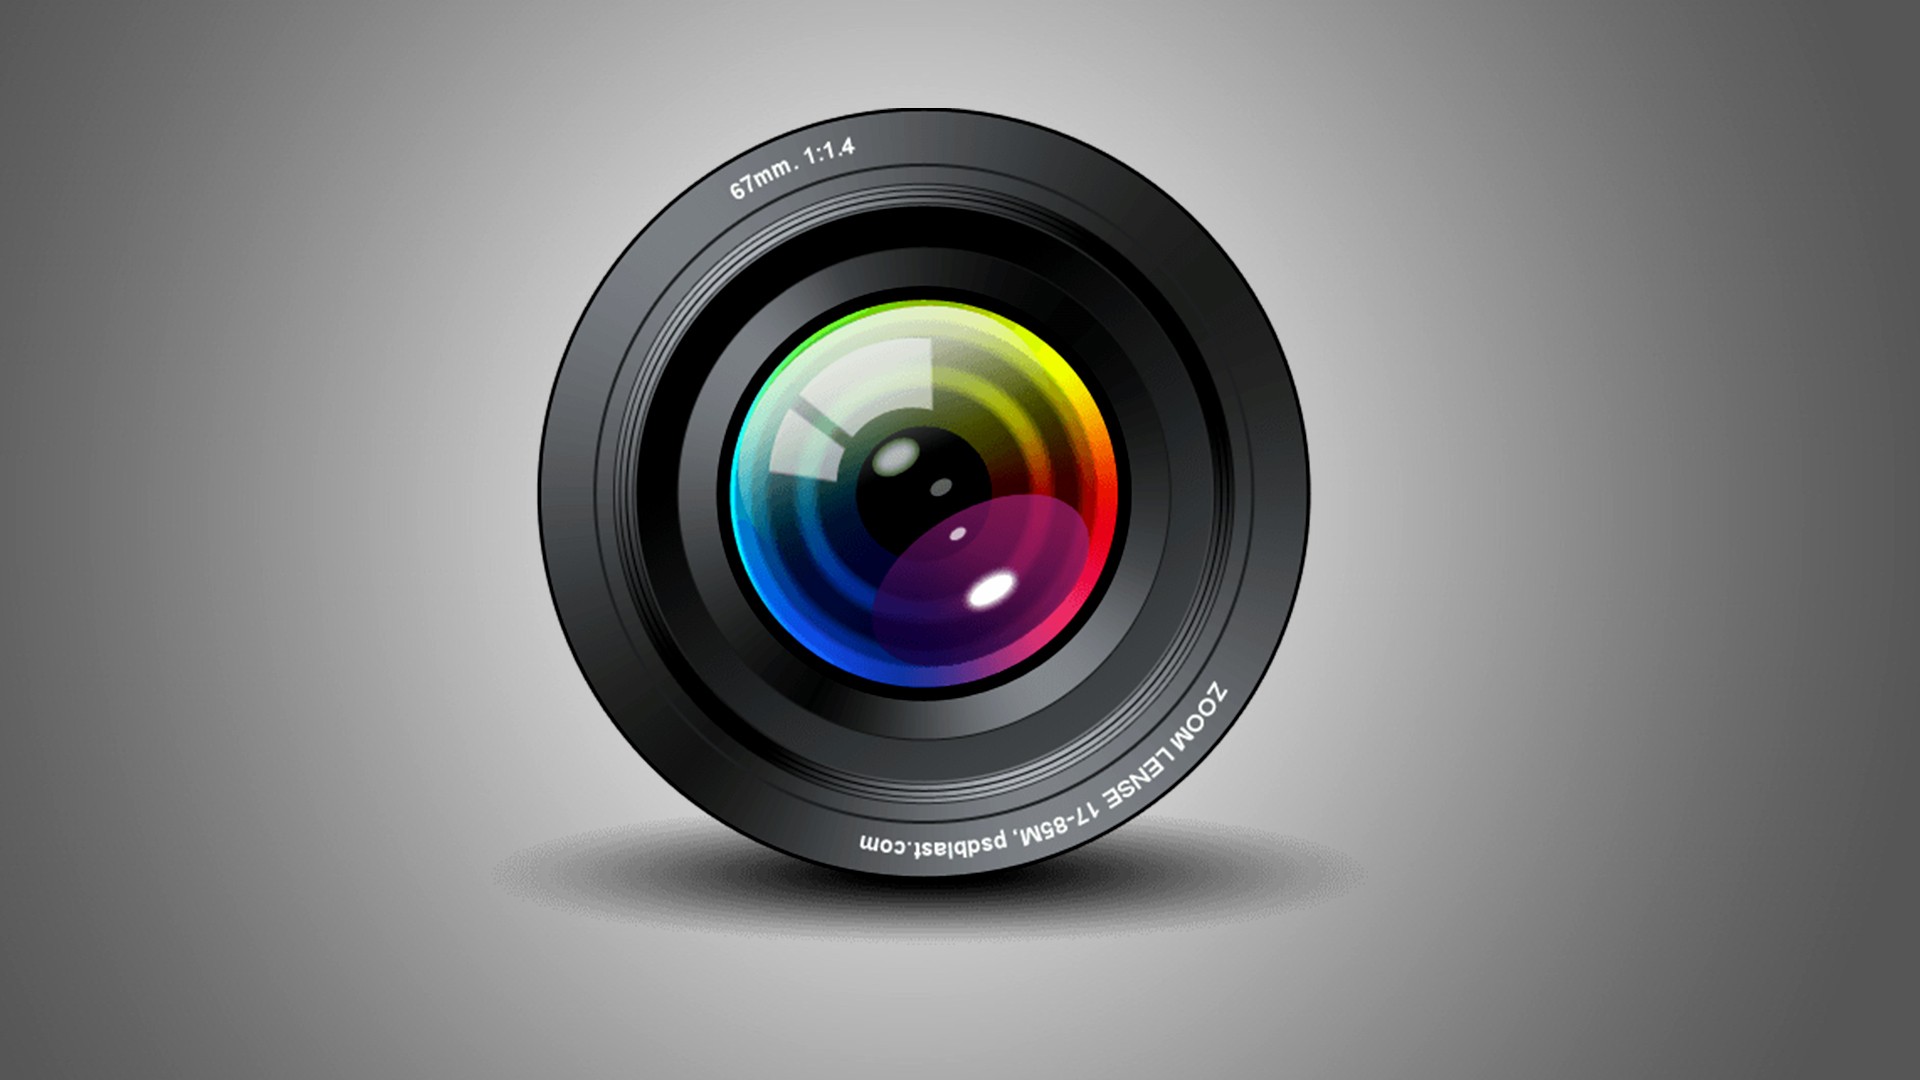 camera lens wallpaper,camera lens,cameras & optics,lens,camera accessory,product